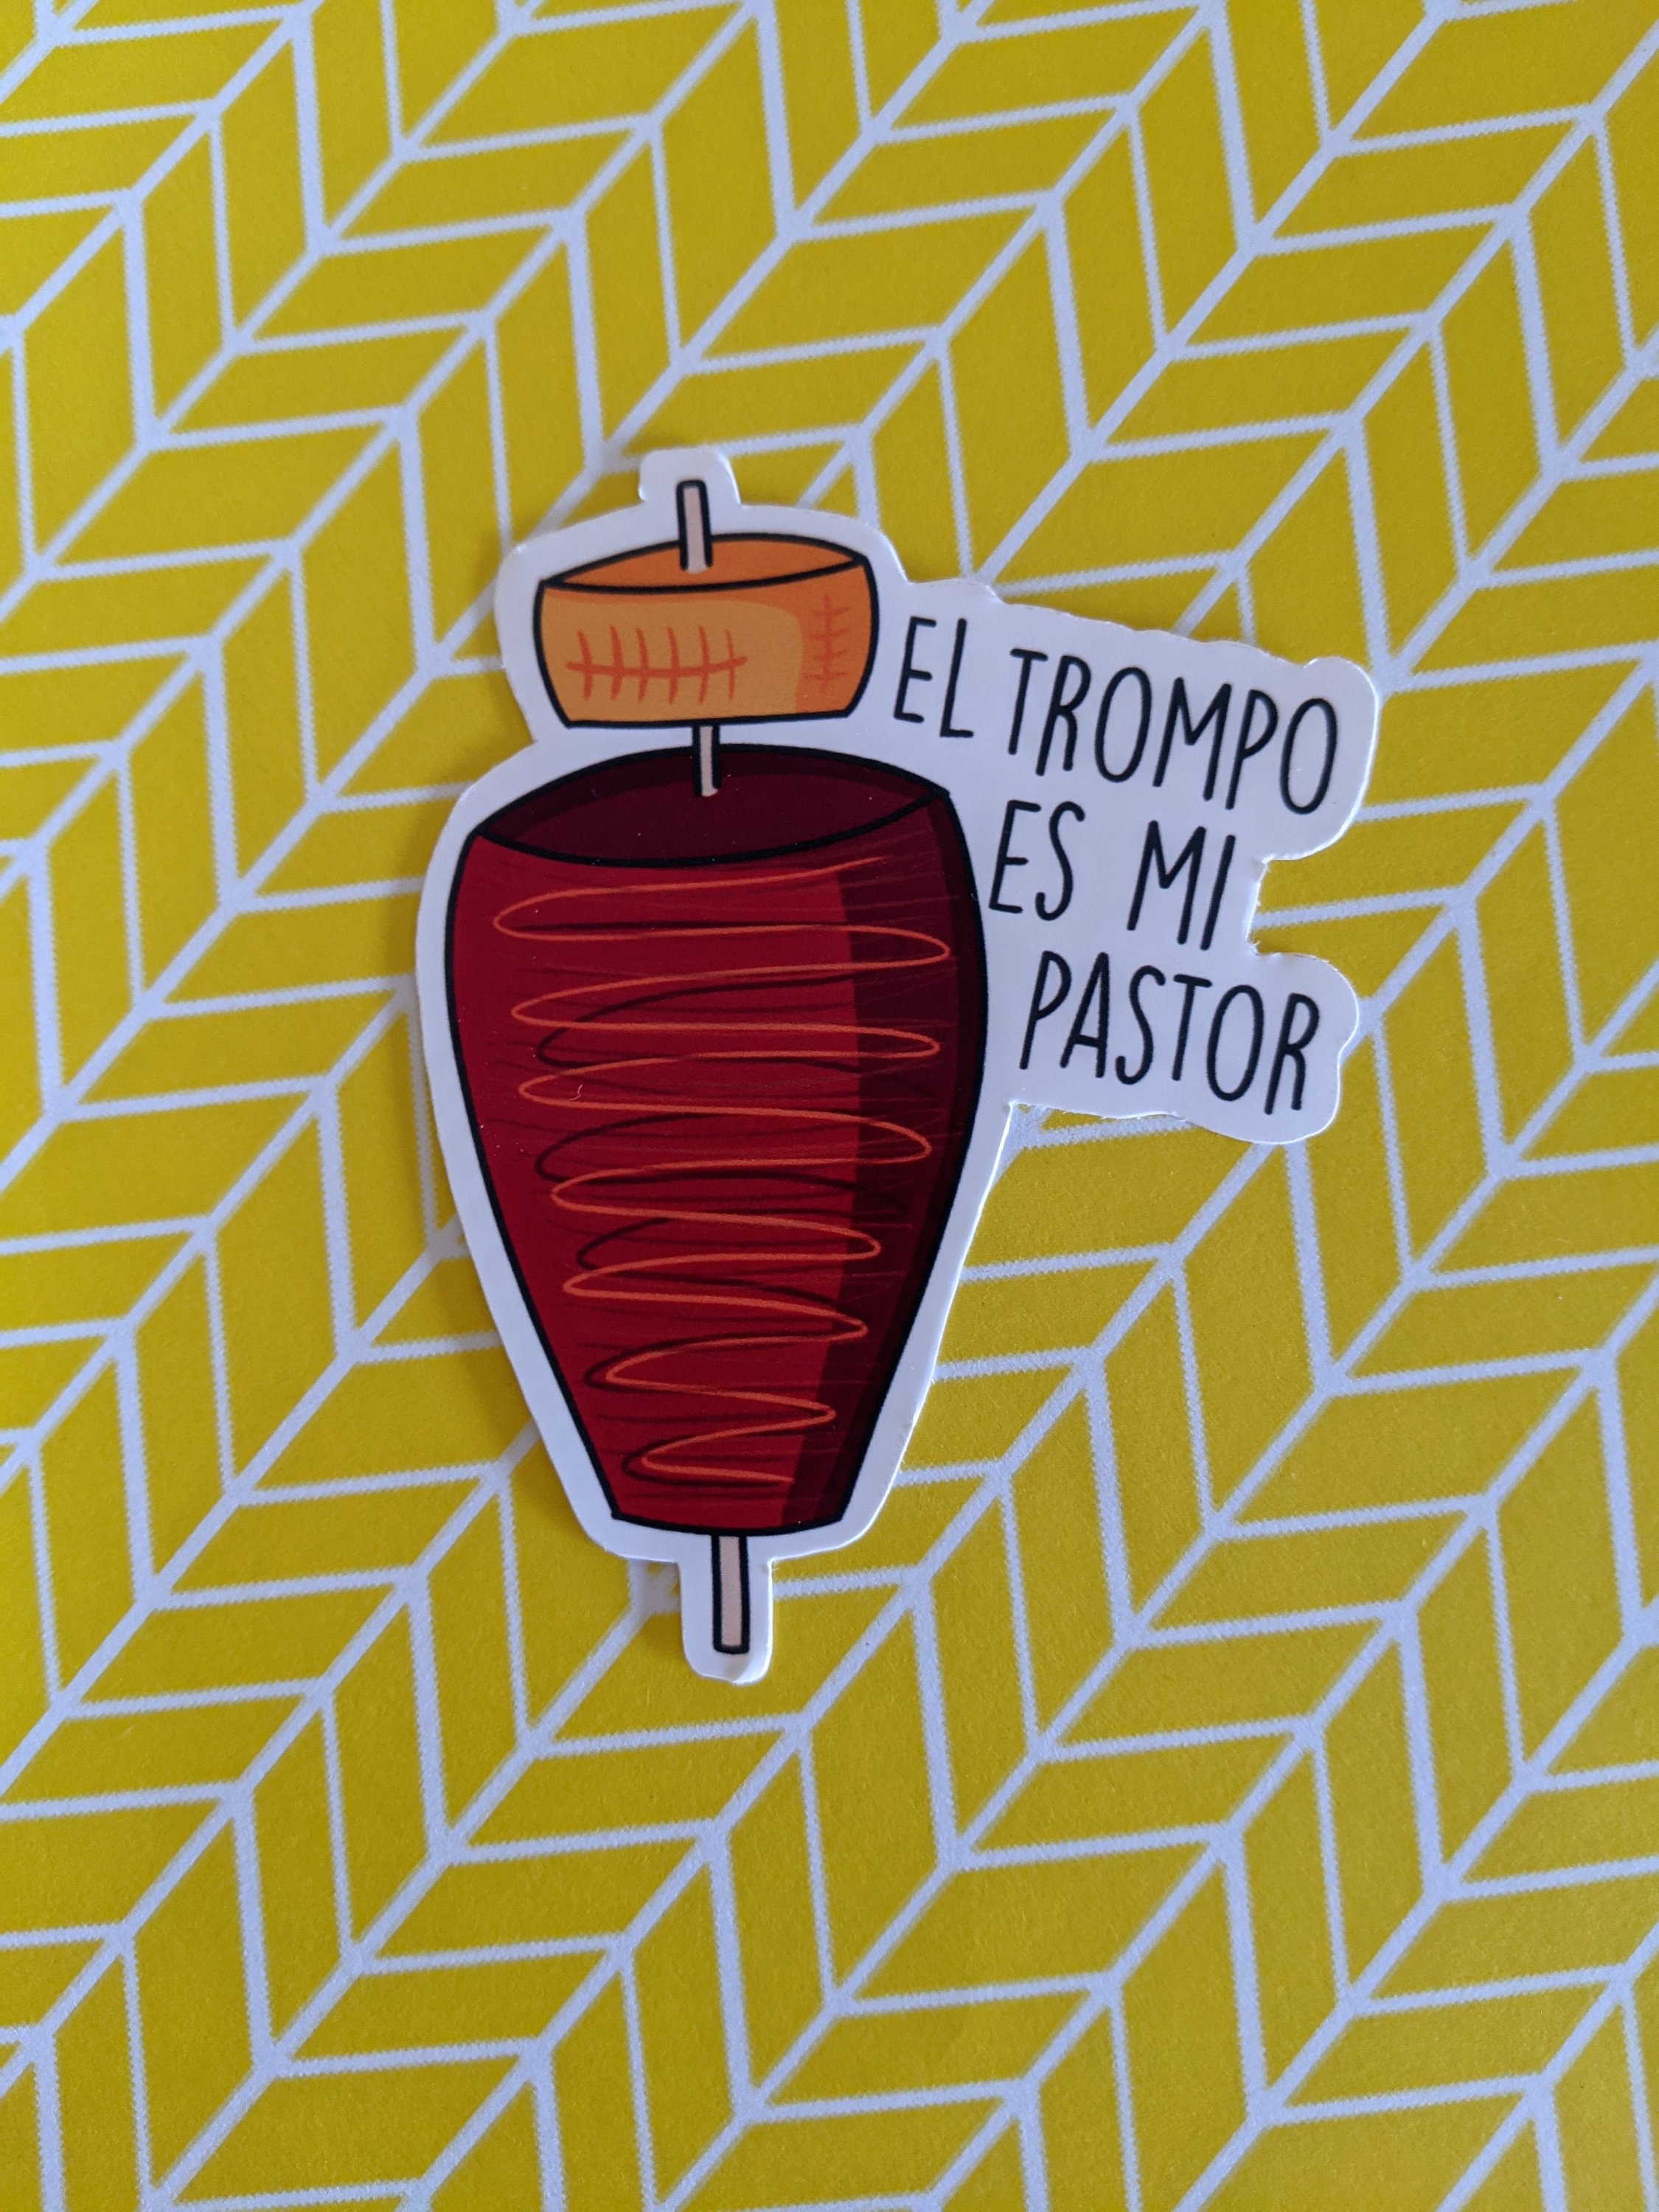 El Trompo Es Mi Pastor Funny Sticker in Spanish for Latinos - Etsy